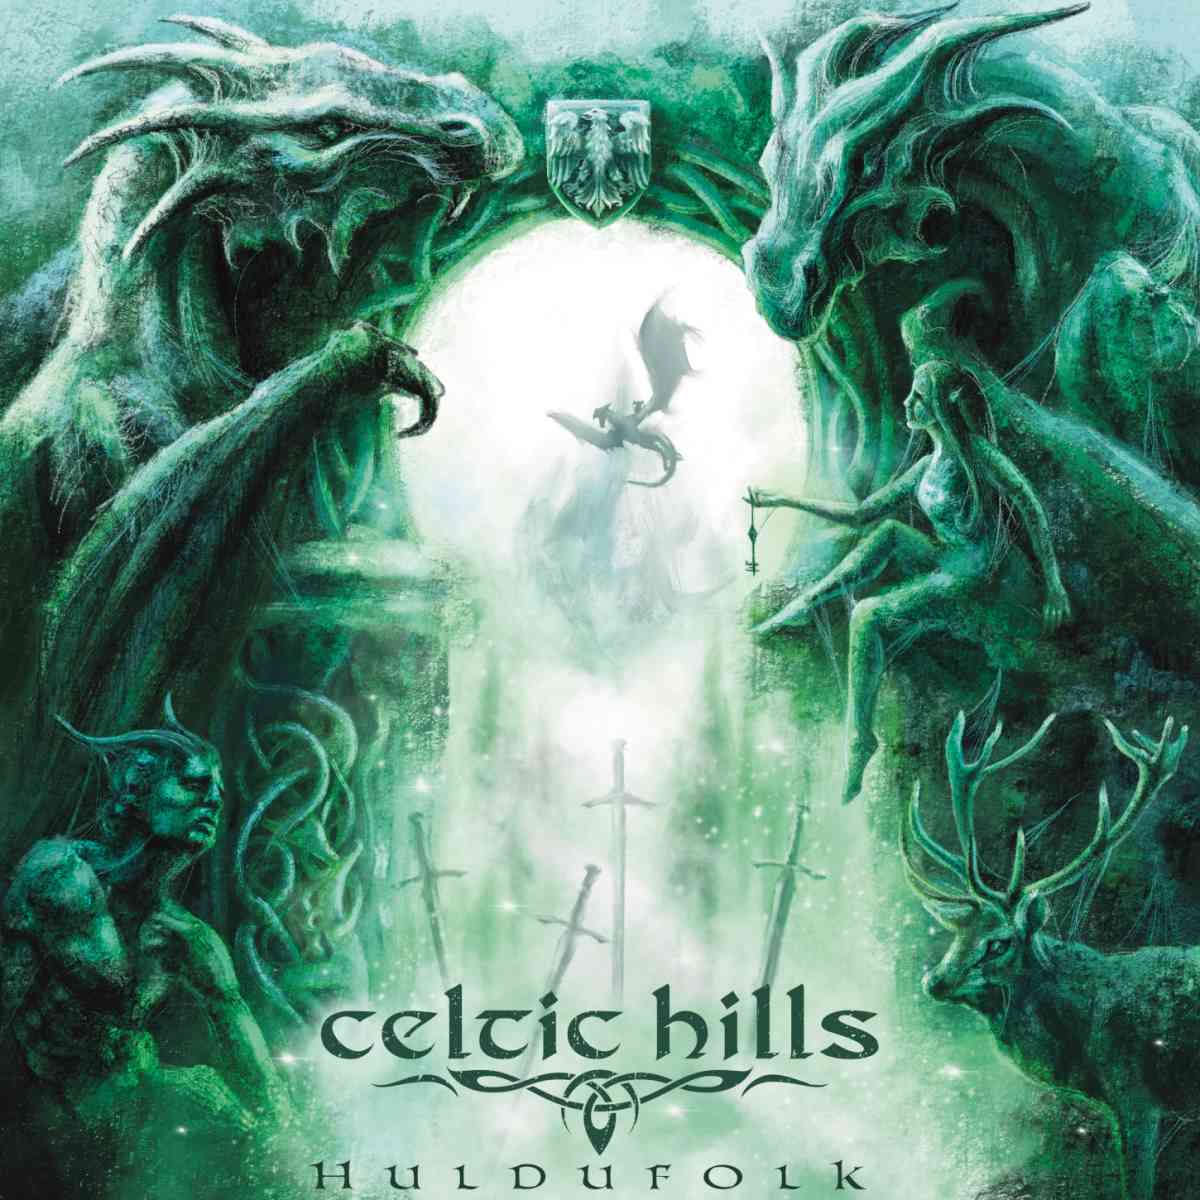 CELTIC HILLS - Huldufolk - album cover